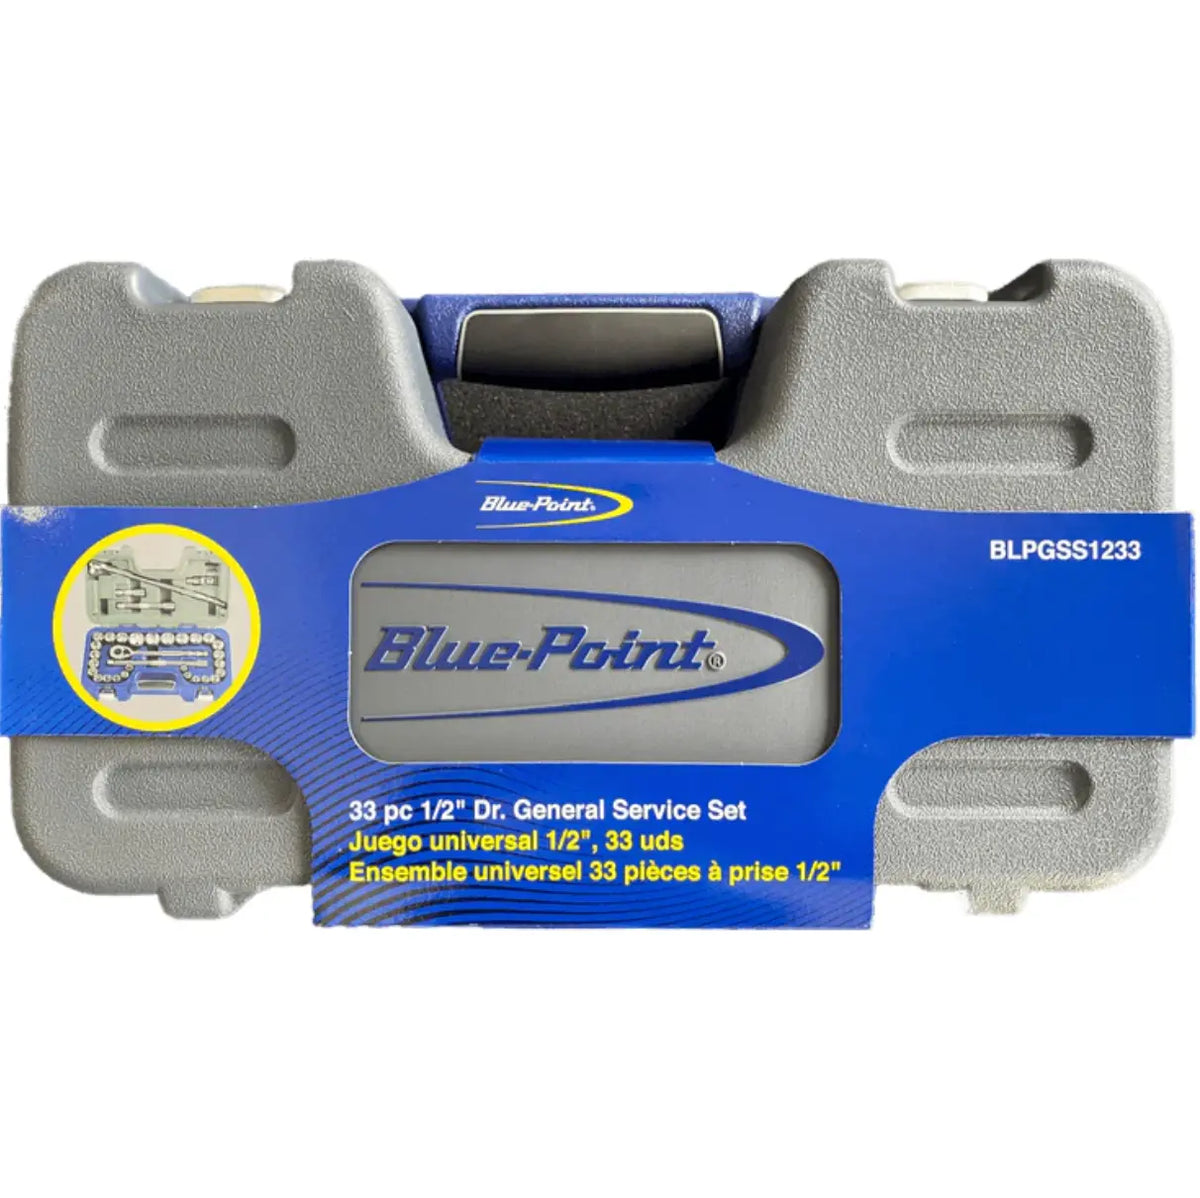 Blue Point 1/2 Drive Socket Set, 33pcs Blpgss1233 - FairTools Blue Point 1/2 Drive Socket Set, 33pcs Blpgss1233